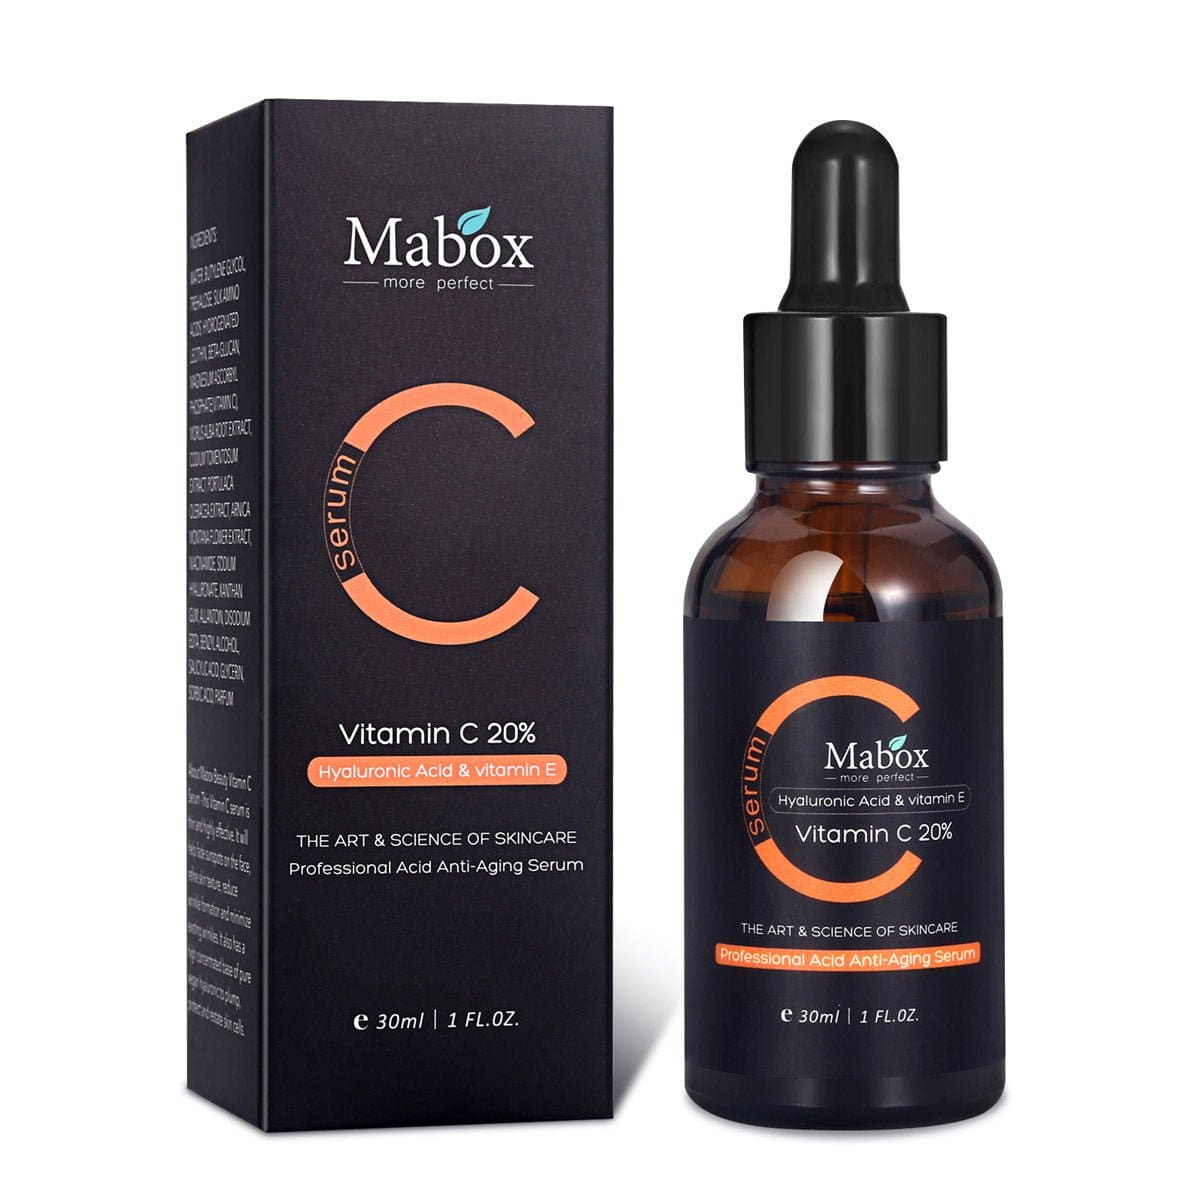 MABOX Skincare Essential Oil - wellnesshop